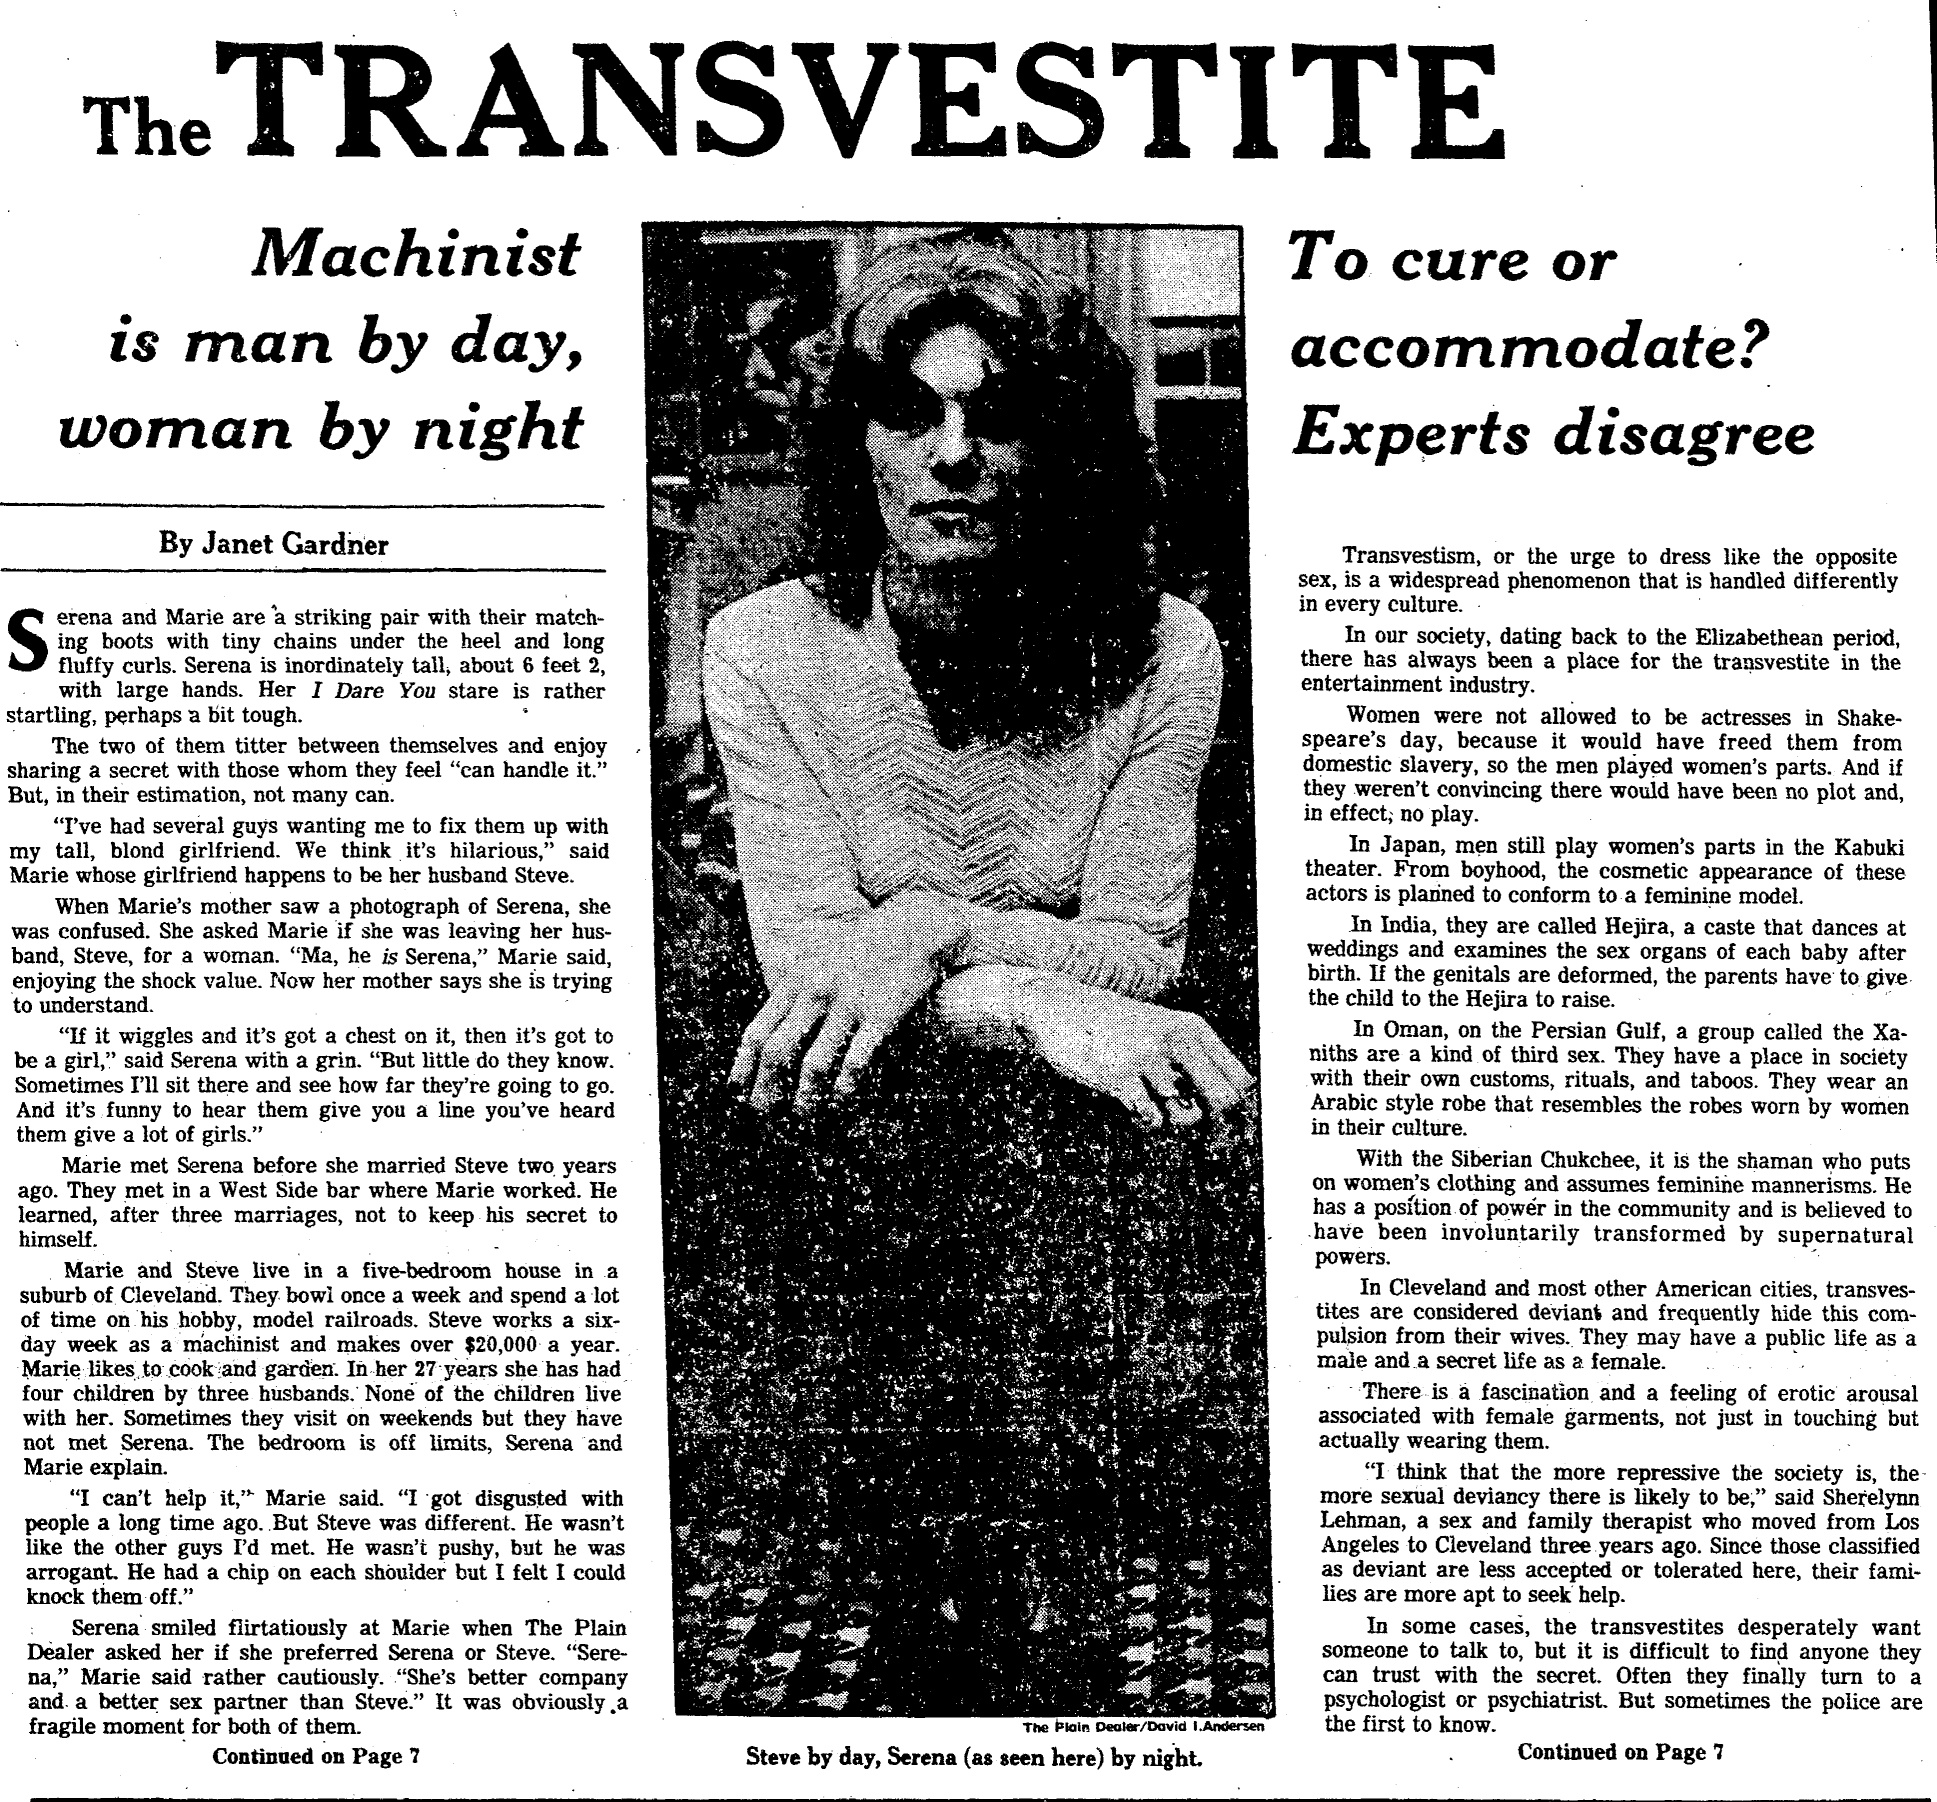 The Transvestite image